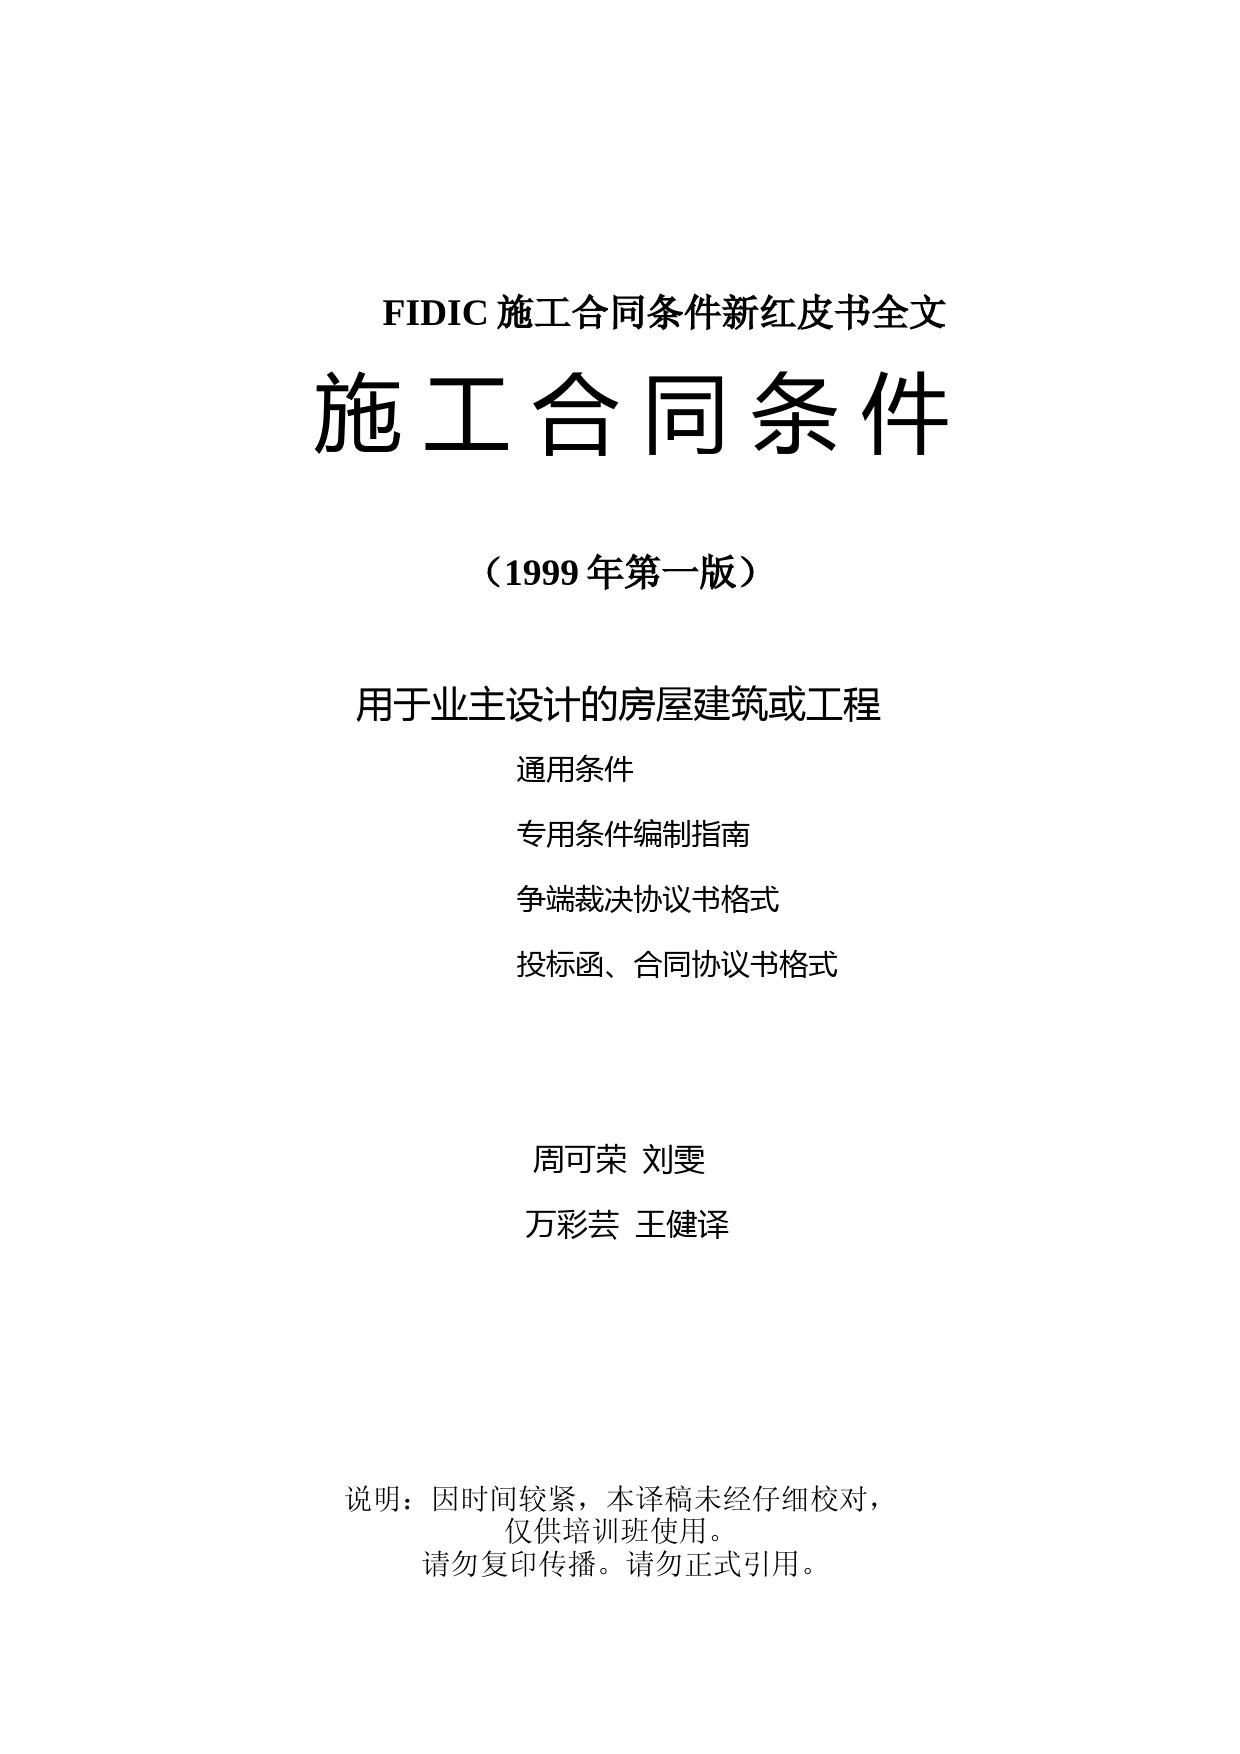 FIDIC施工合同条件新红皮书全文